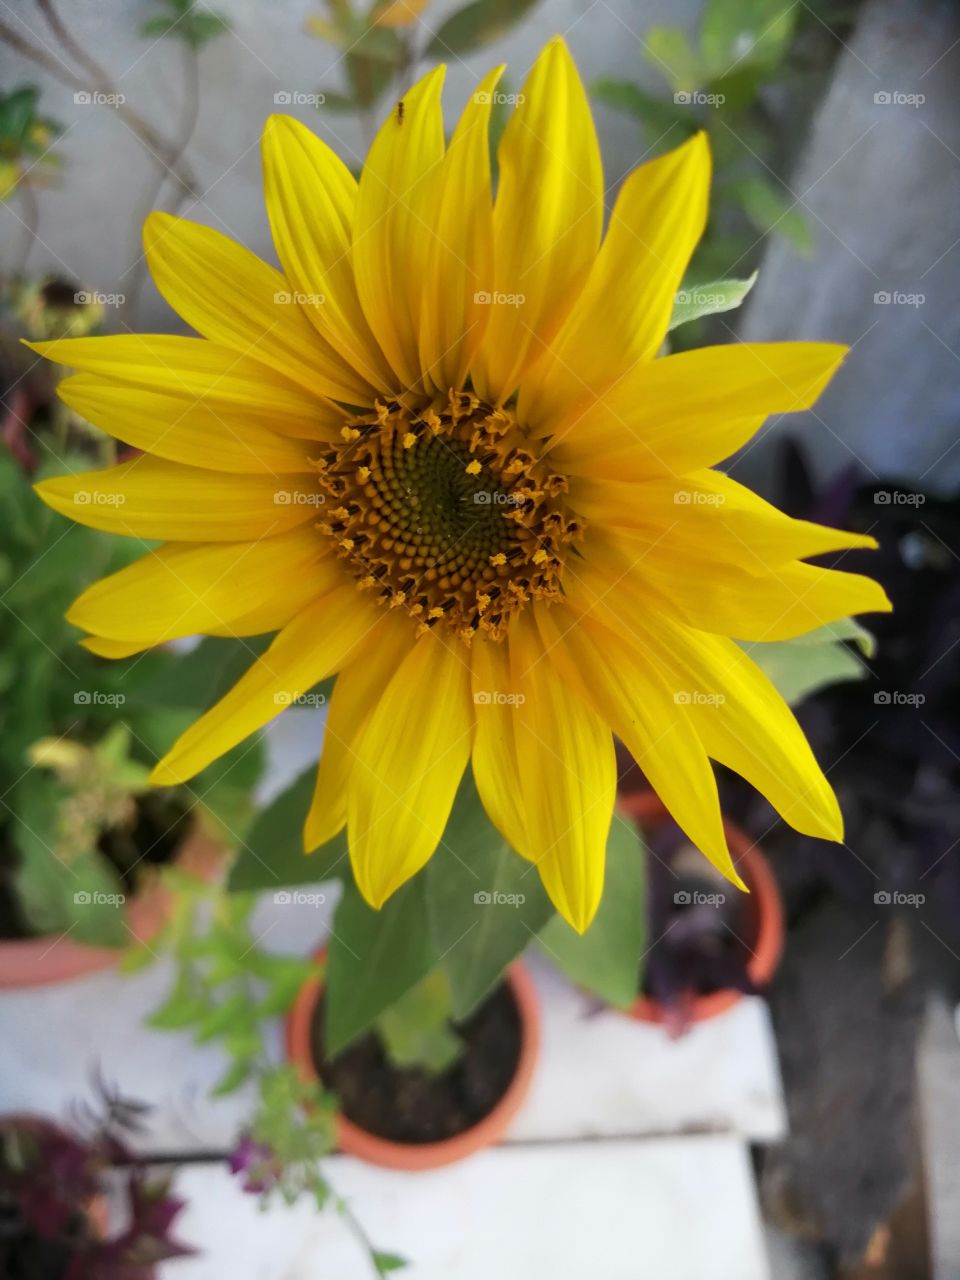 Celebrating spring. Beautiful yellow colour sunflower.